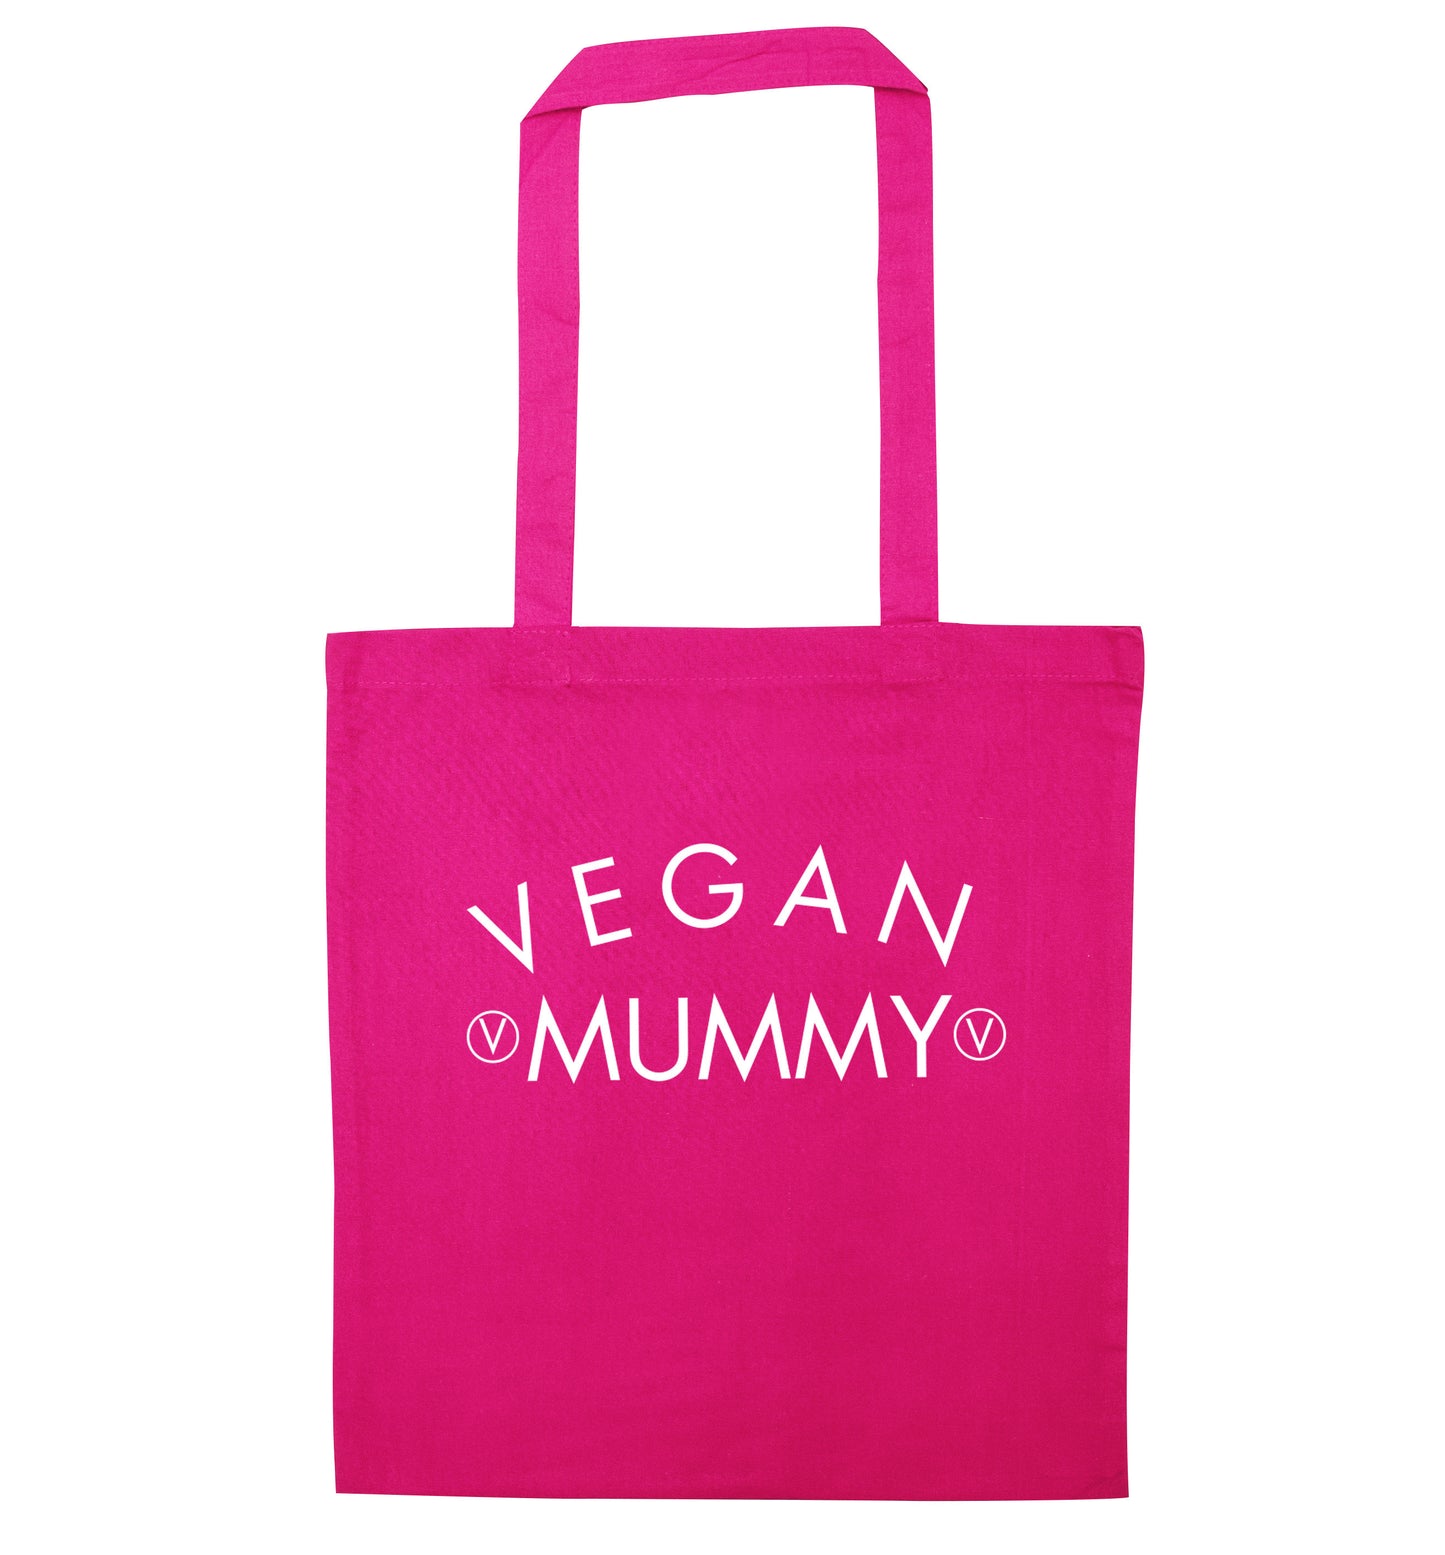 Vegan mummy pink tote bag